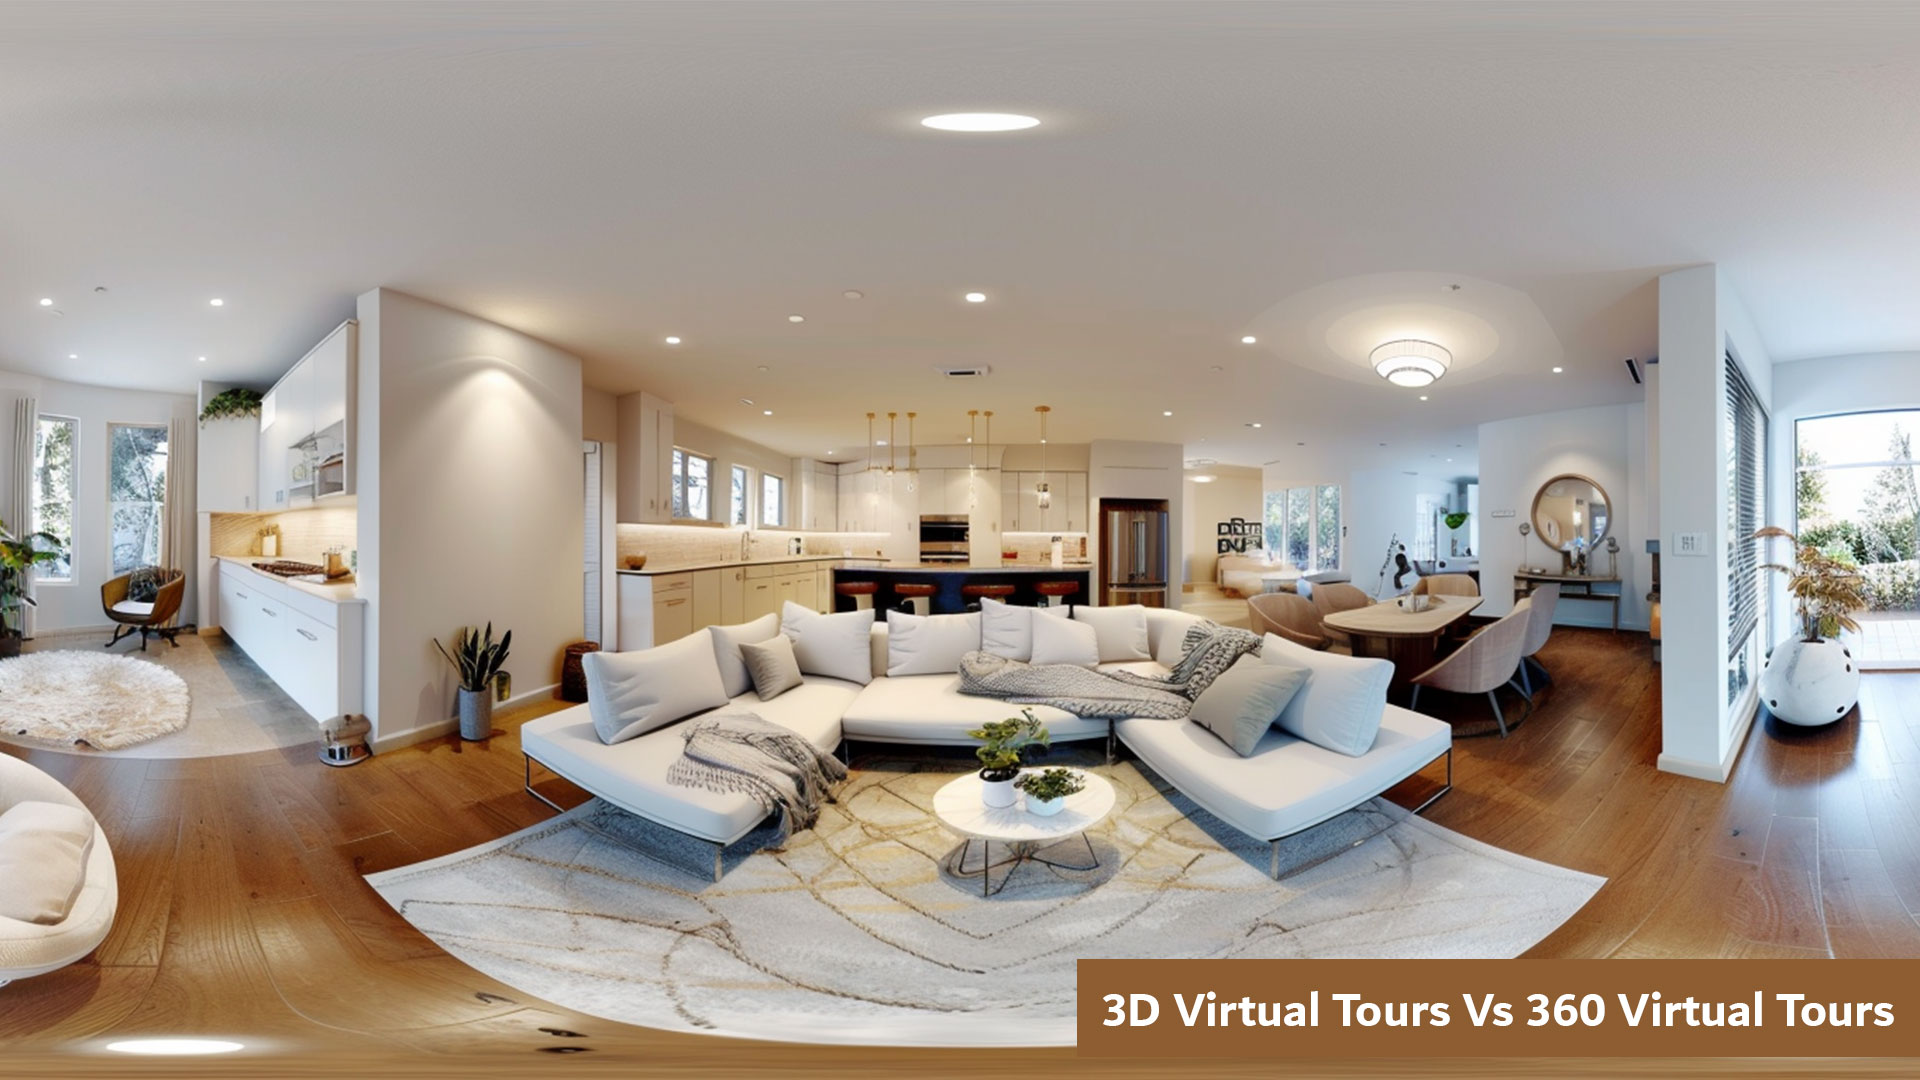 3D Virtual Tours Vs 360 Virtual Tours